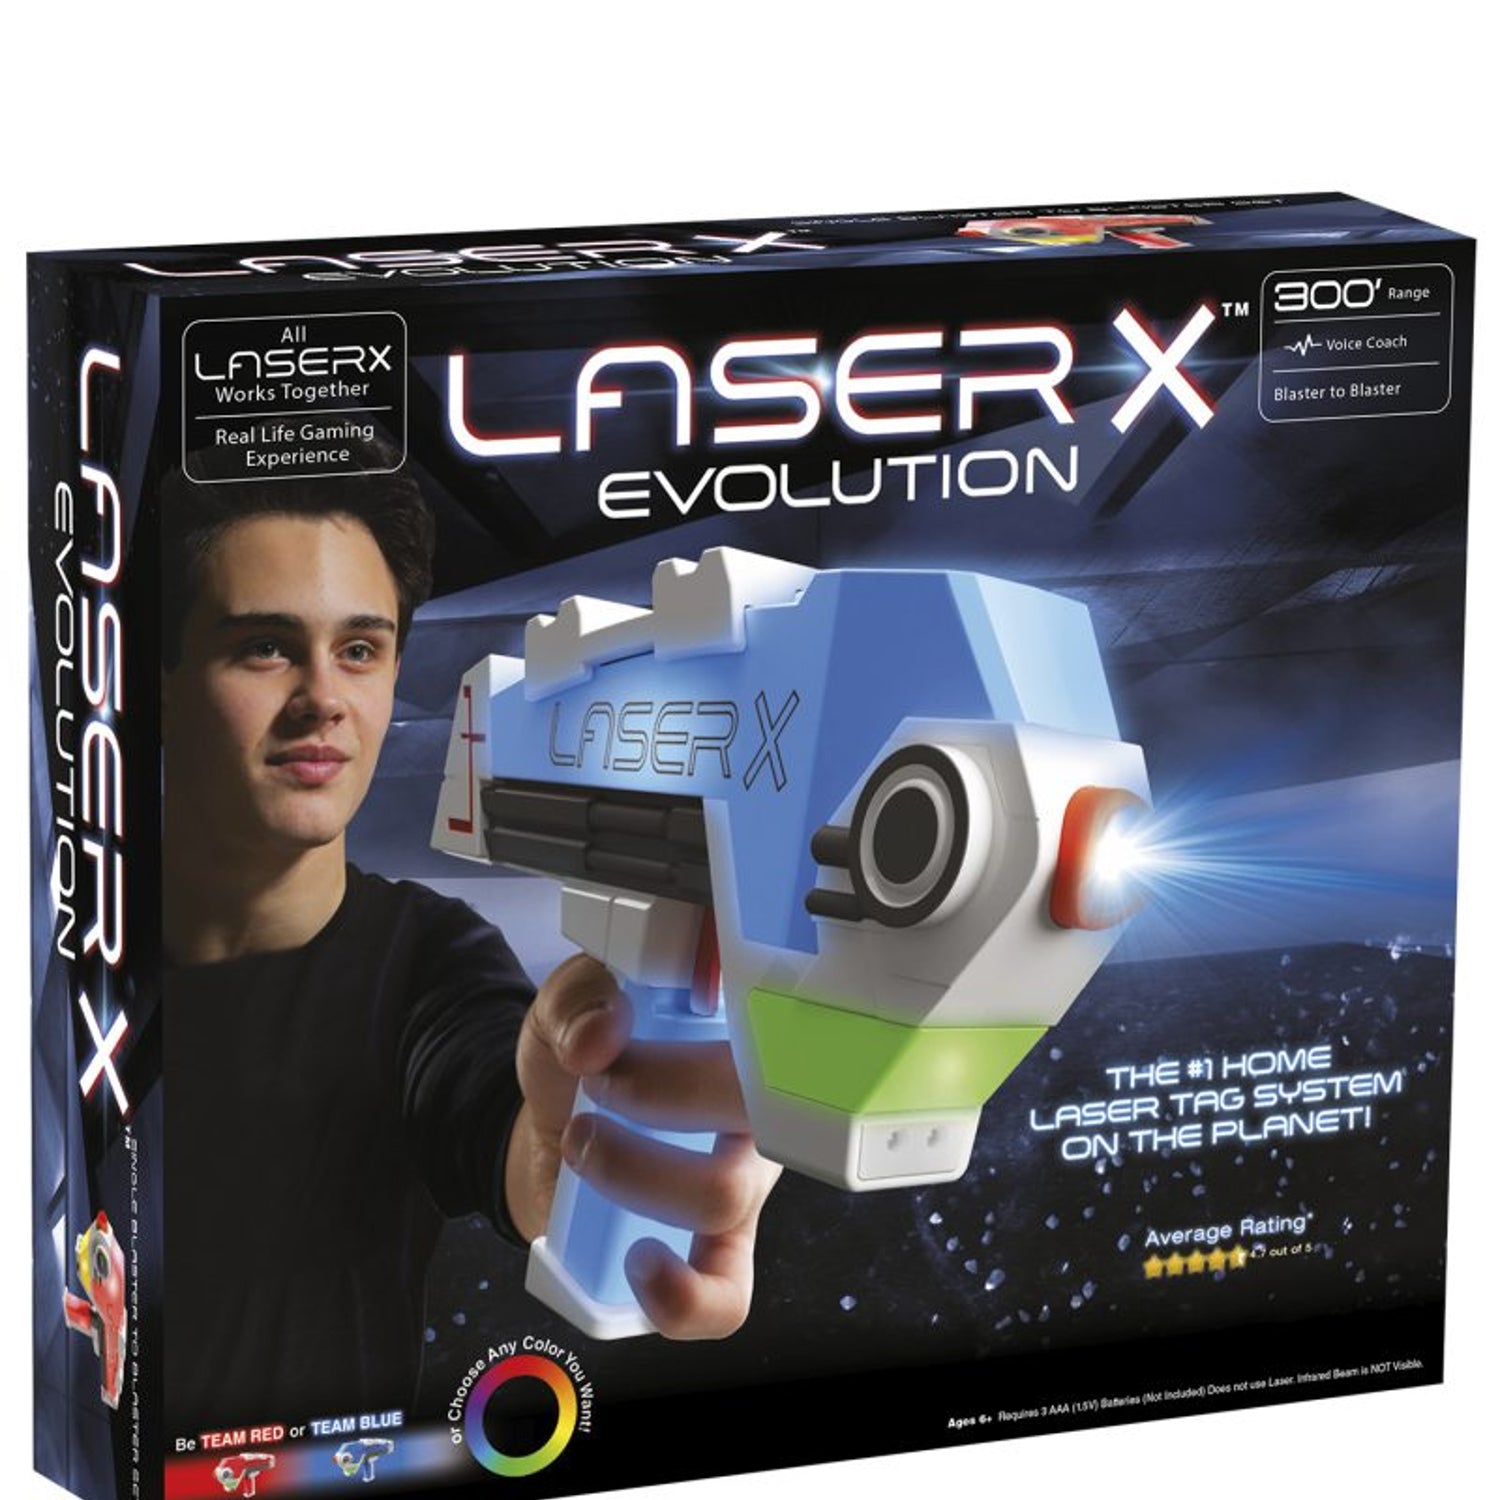 LASER X Evolution Double Blaster Set for 2 Players - Laser Gun